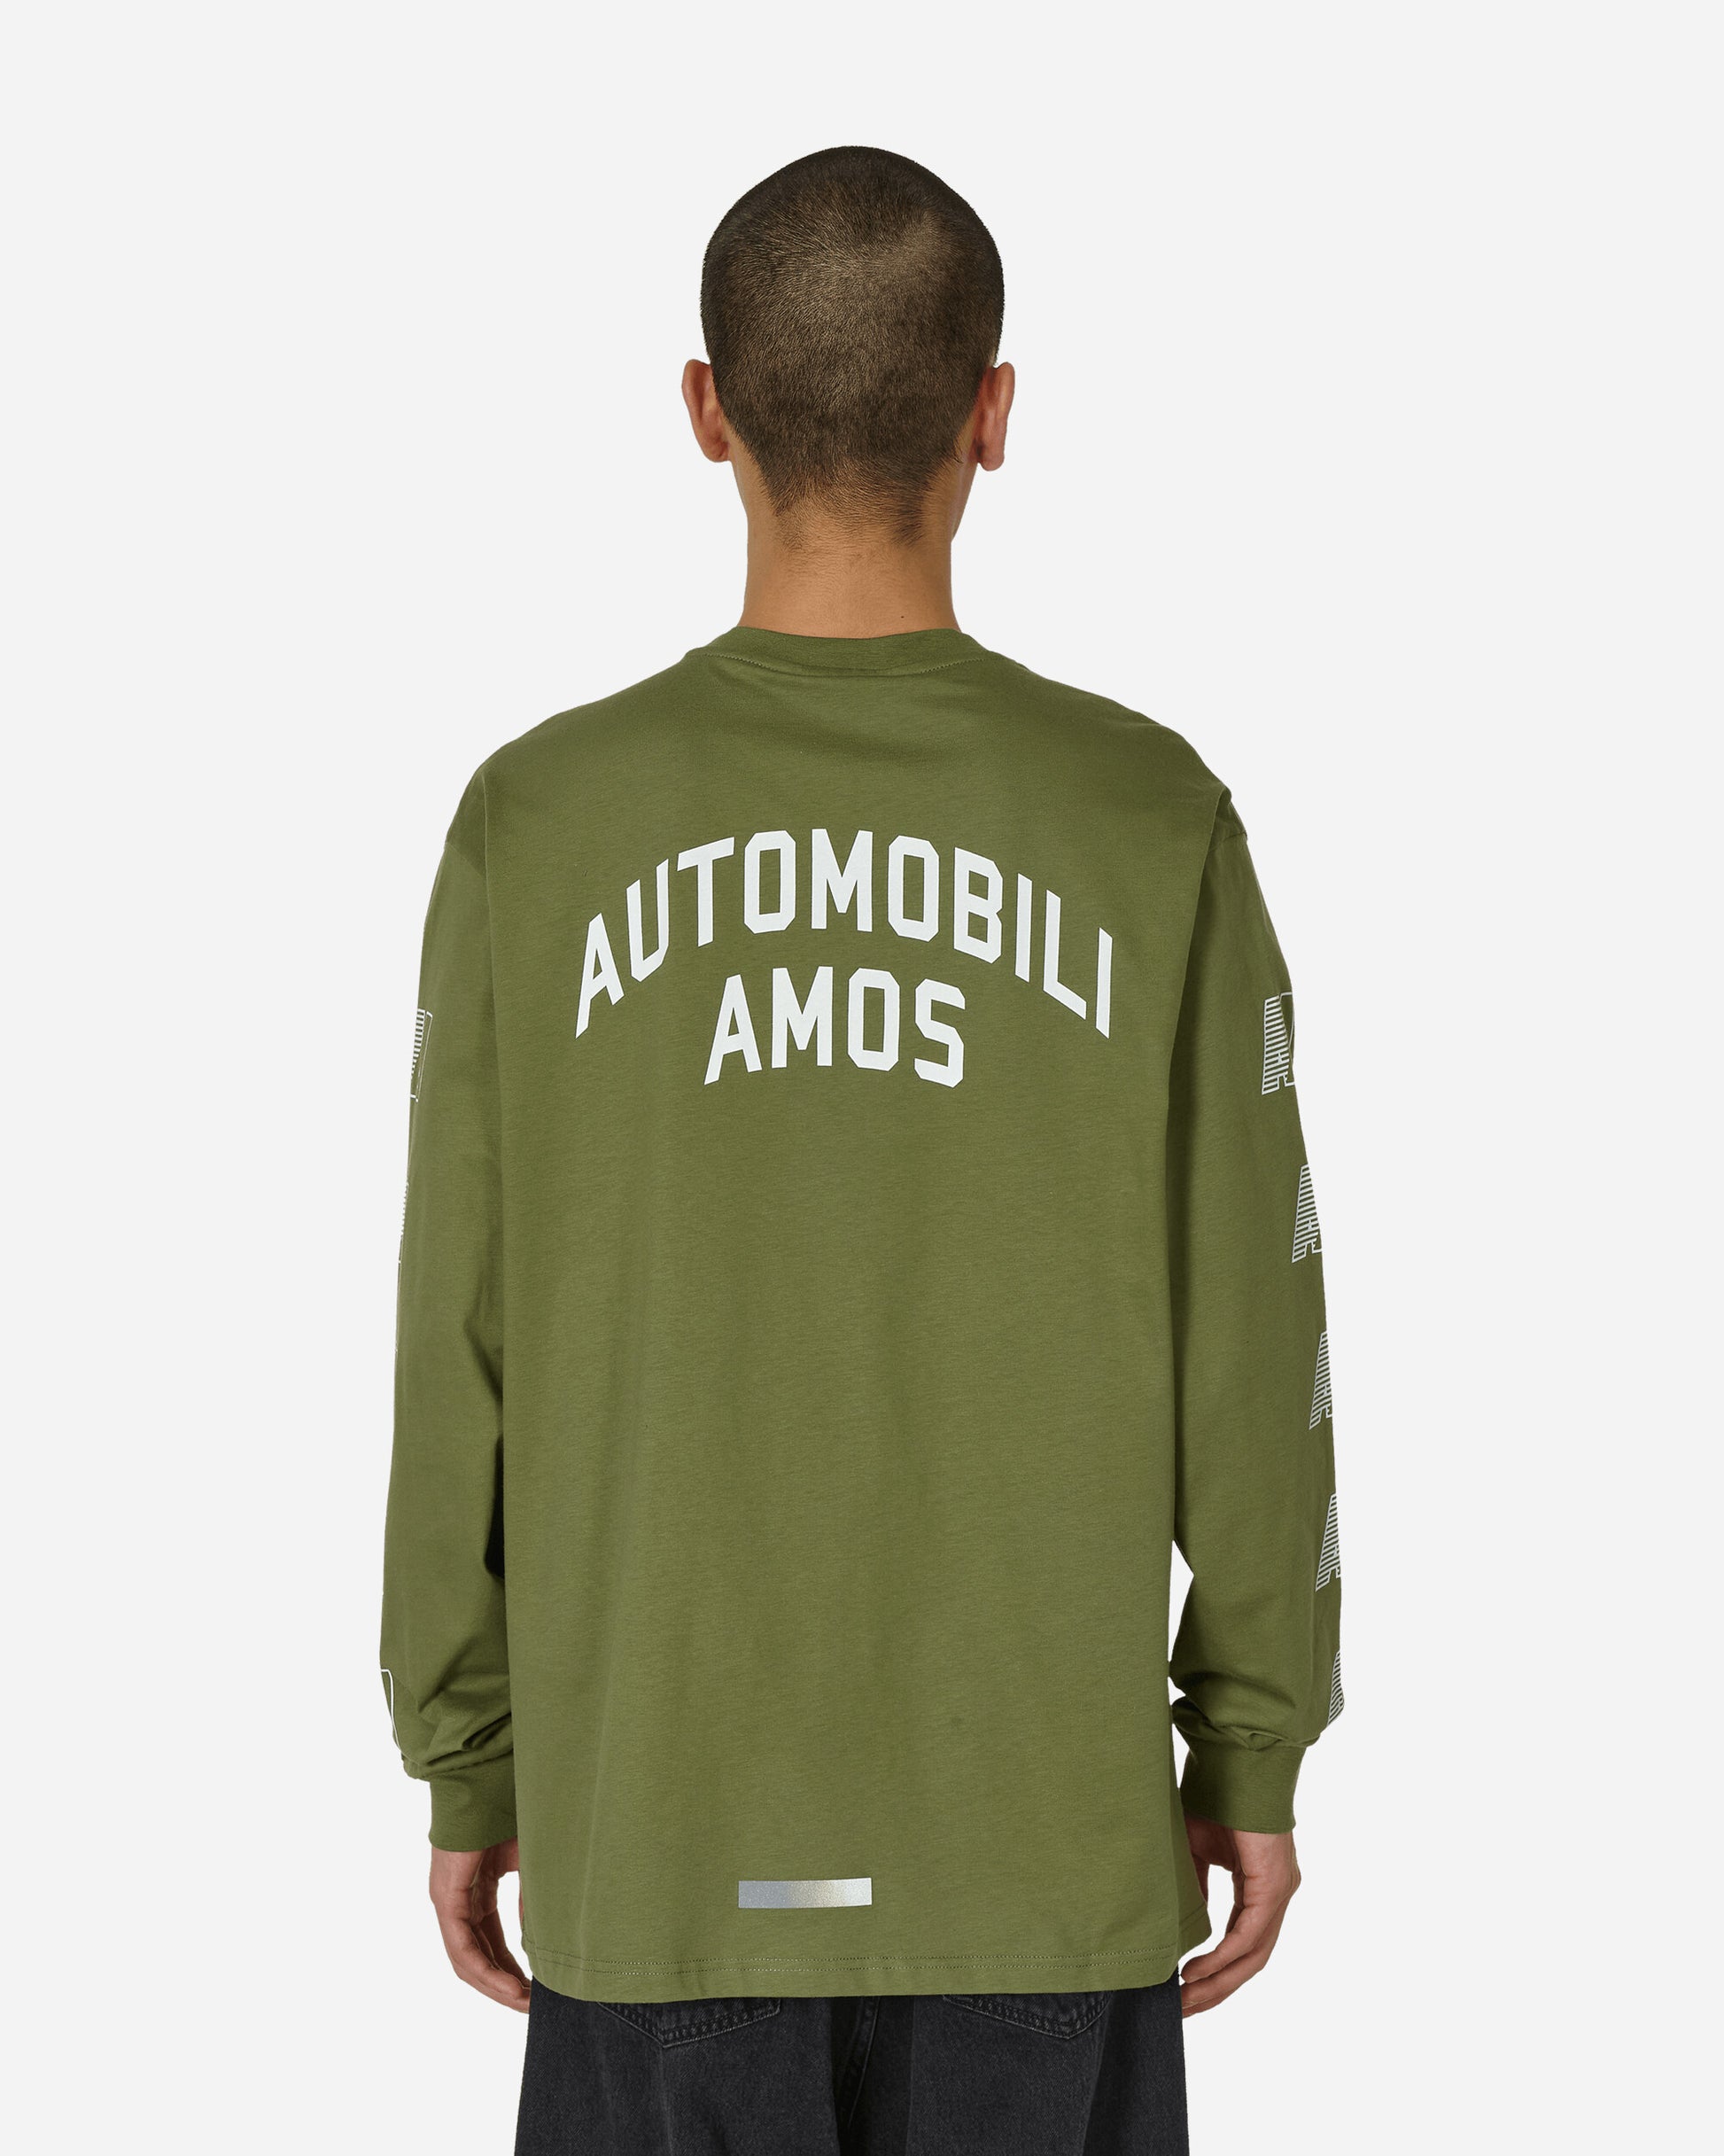 Automobili Amos Amos Long Sleeve Army T-Shirts Longsleeve C1AALS03 ARMY